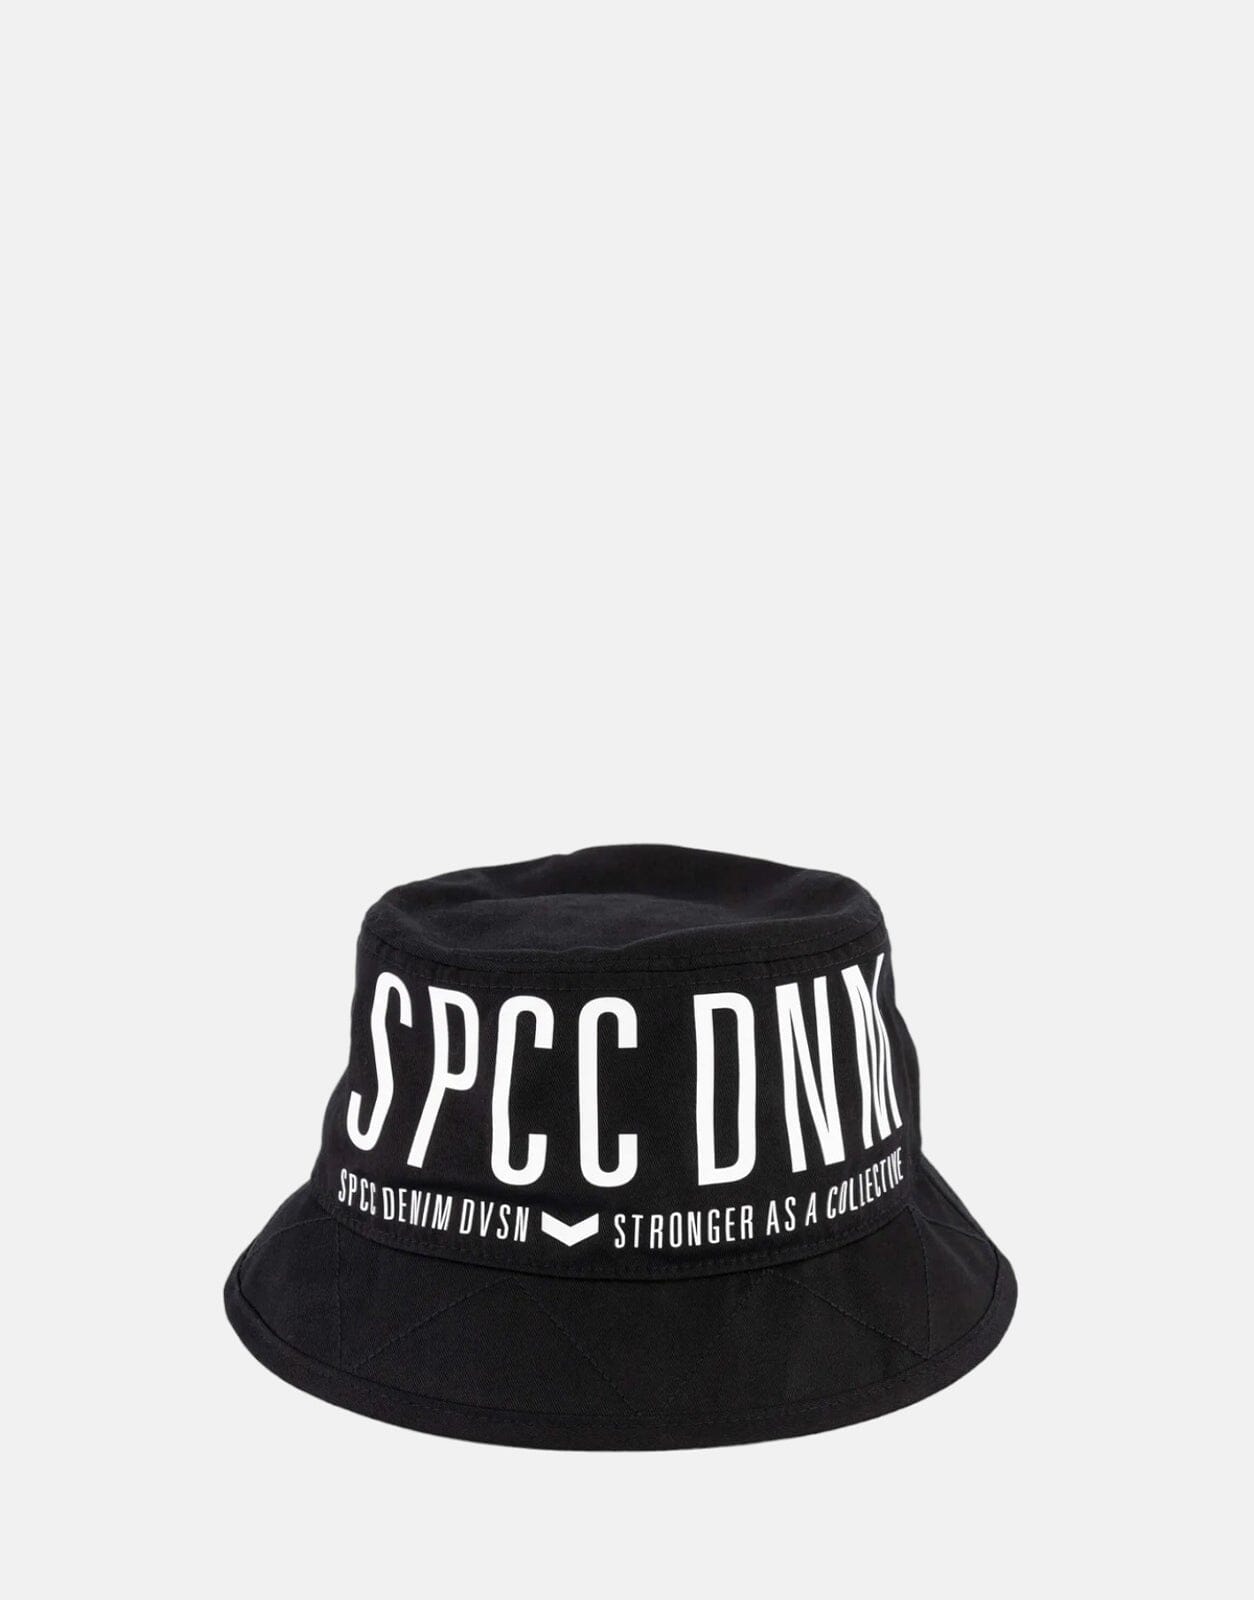 SPCC Oliveira Black Bucket Hat